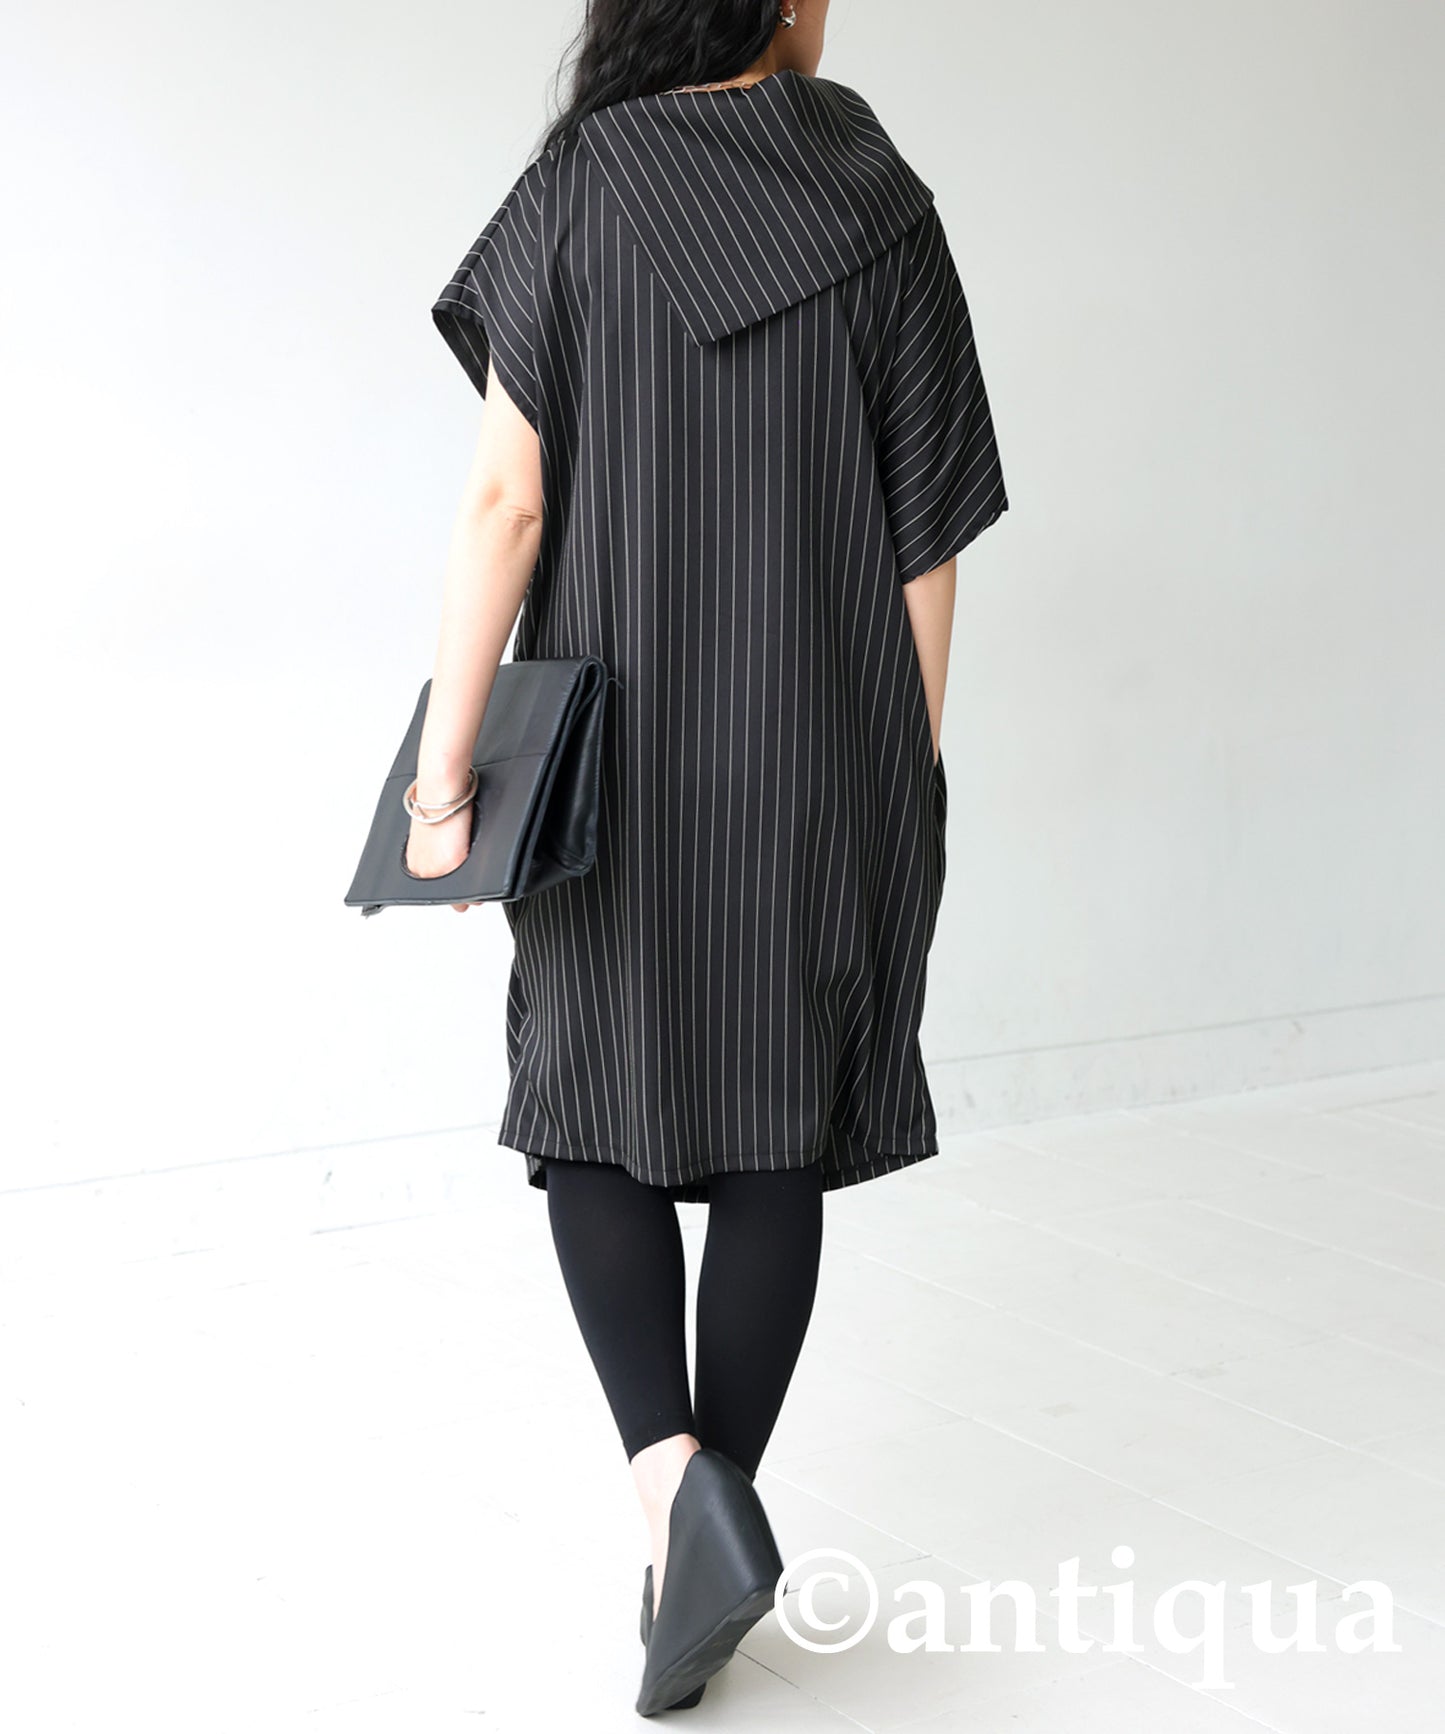 Stripe Pattern Asymmetry Ladies Casual dress